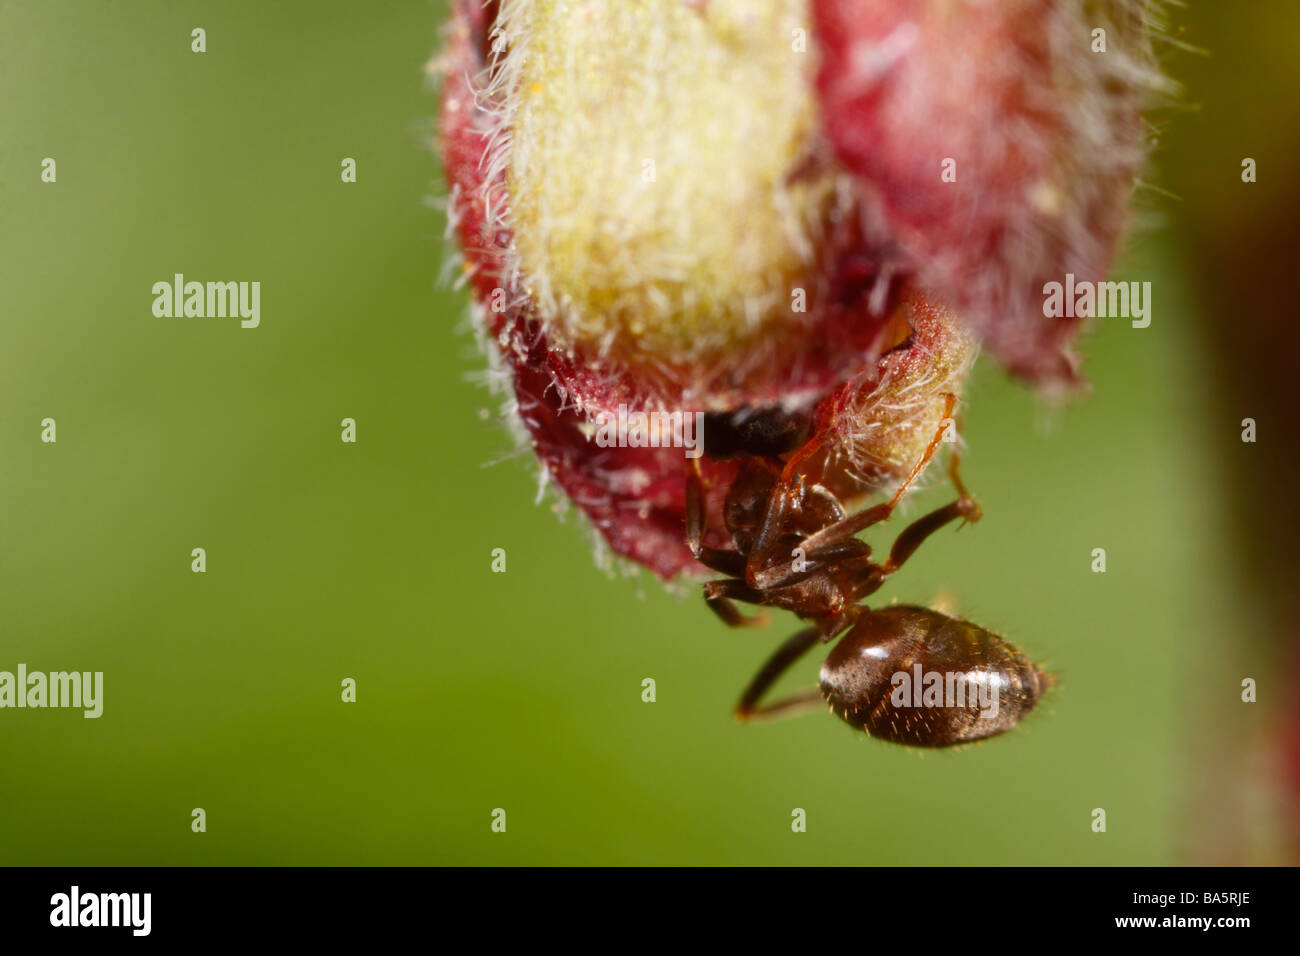 Hormiga alimentándose de una flor de uchuva (Lasius Níger, hormiga negra de jardín) Foto de stock